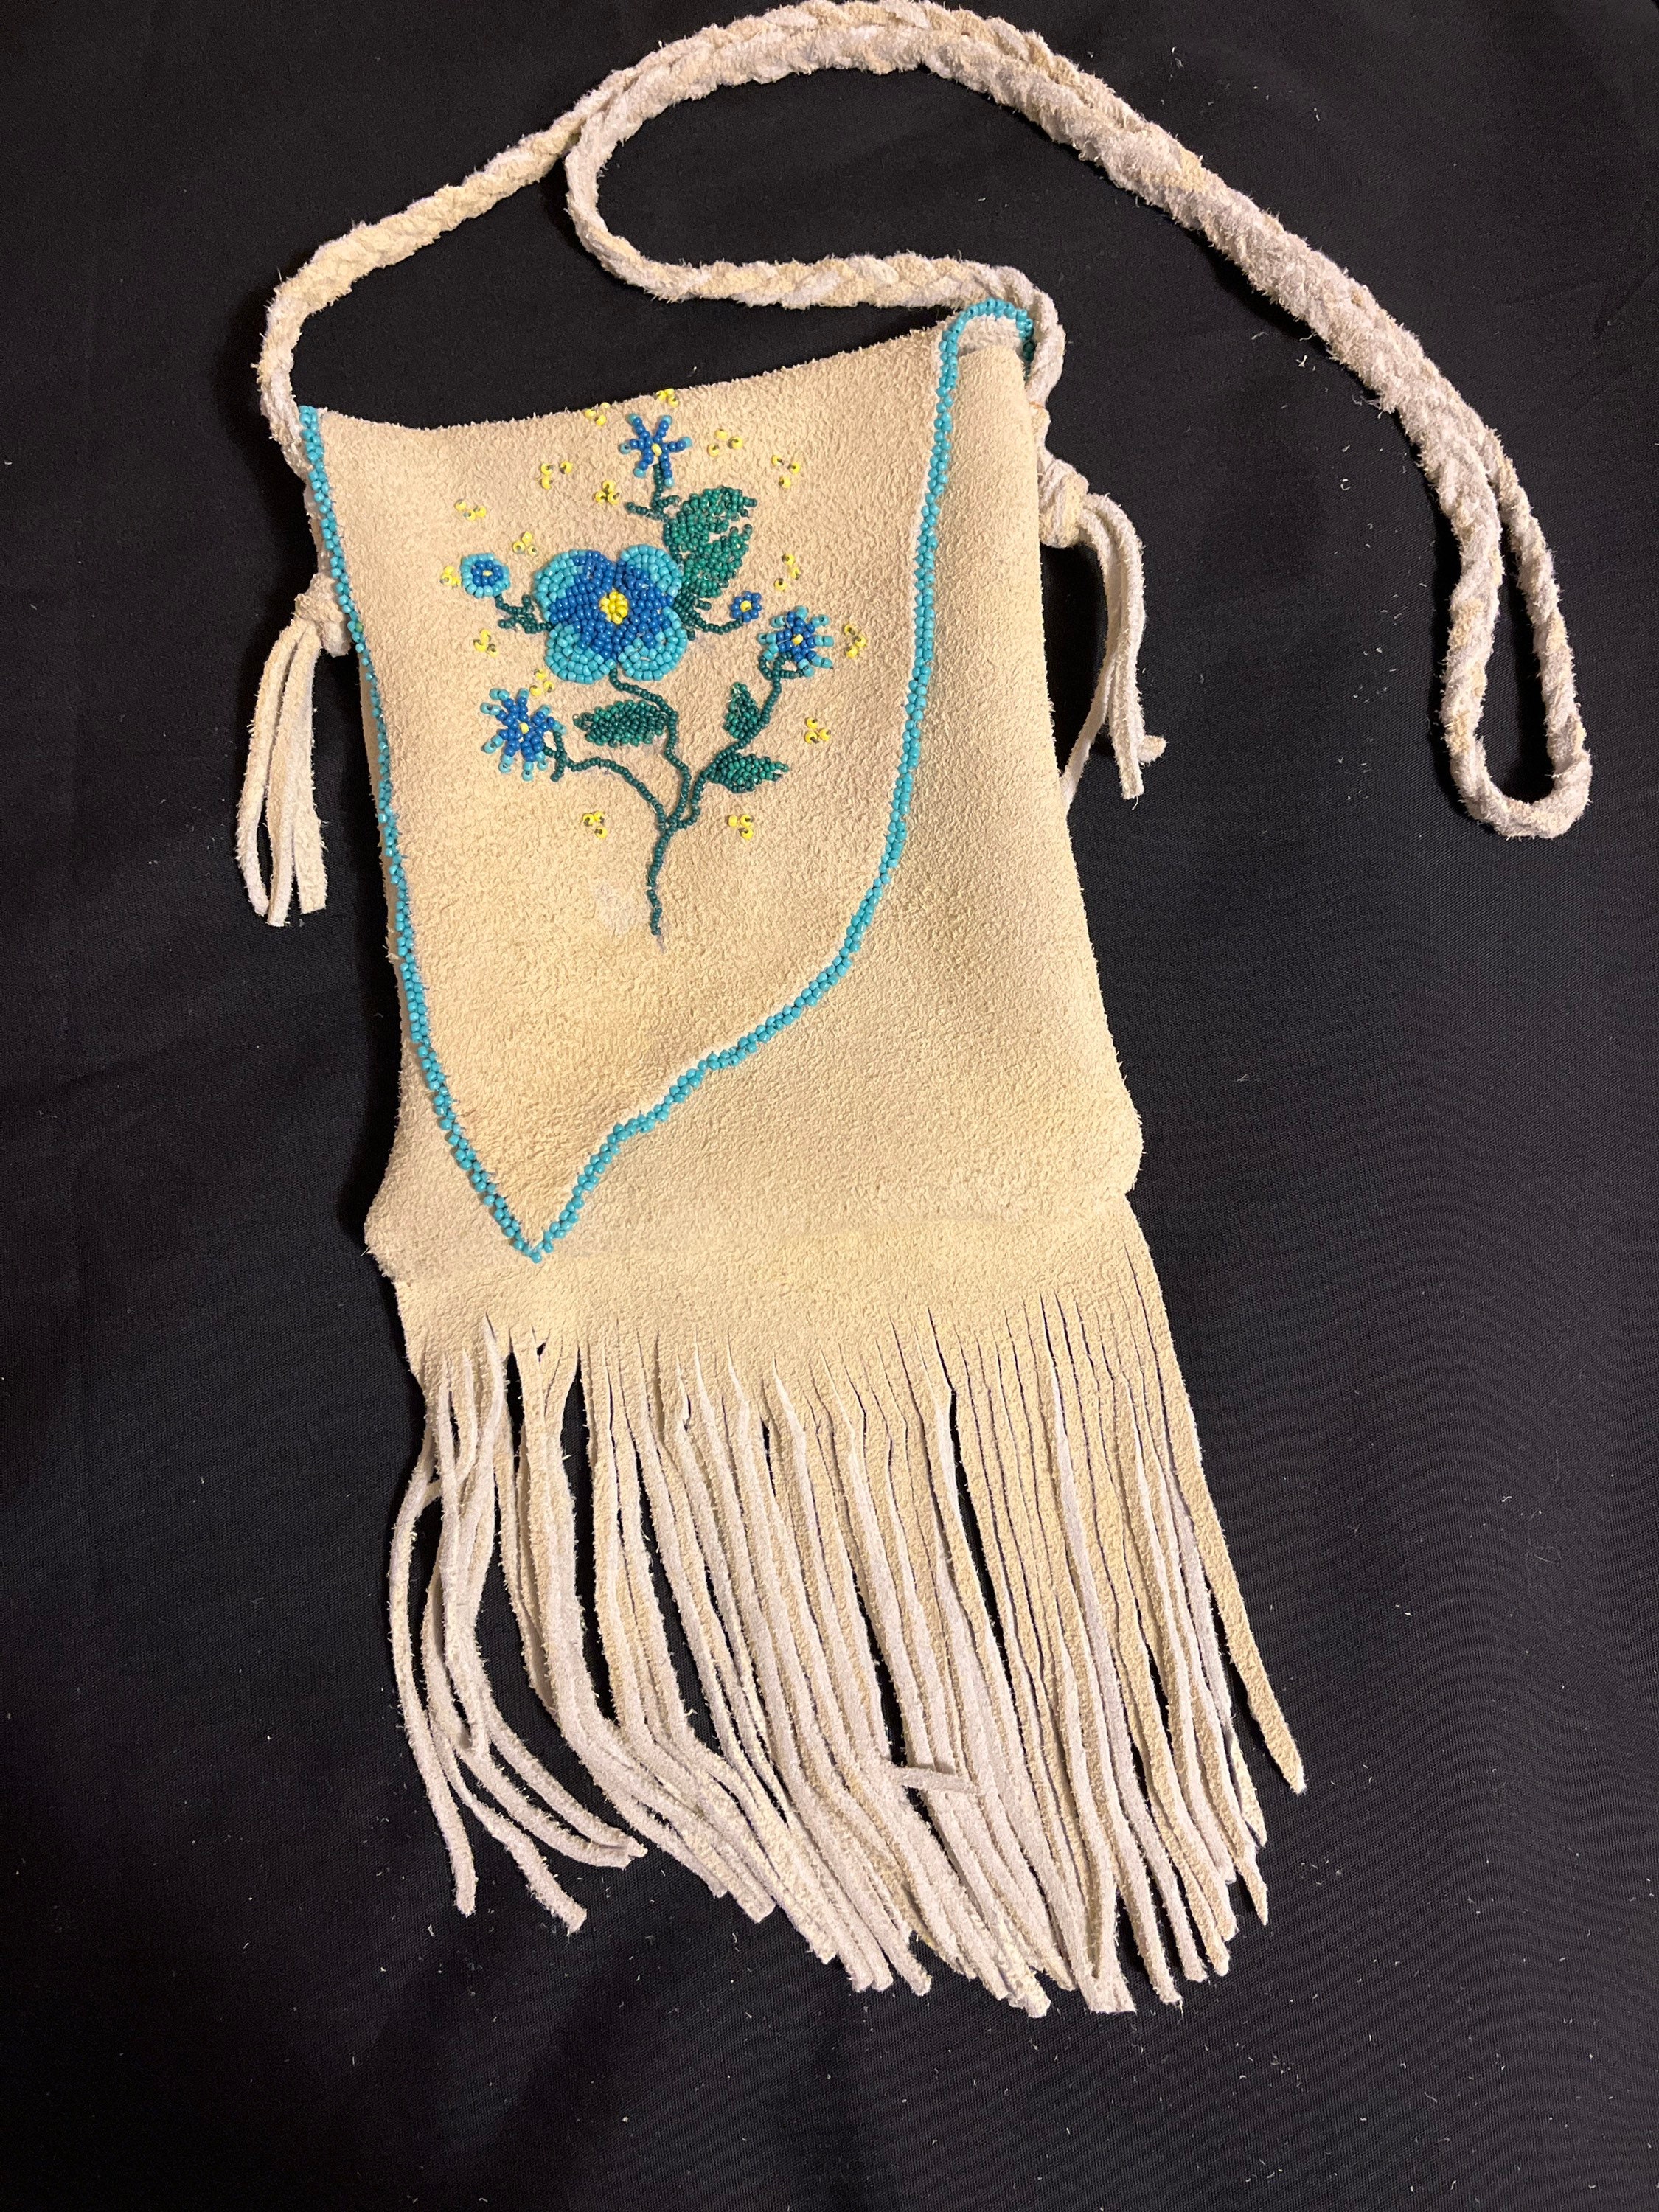 SMOKE BUCKSKIN Leather Hide for Native Crafts Laces Pipe Bags Regalia Pelt  Skins